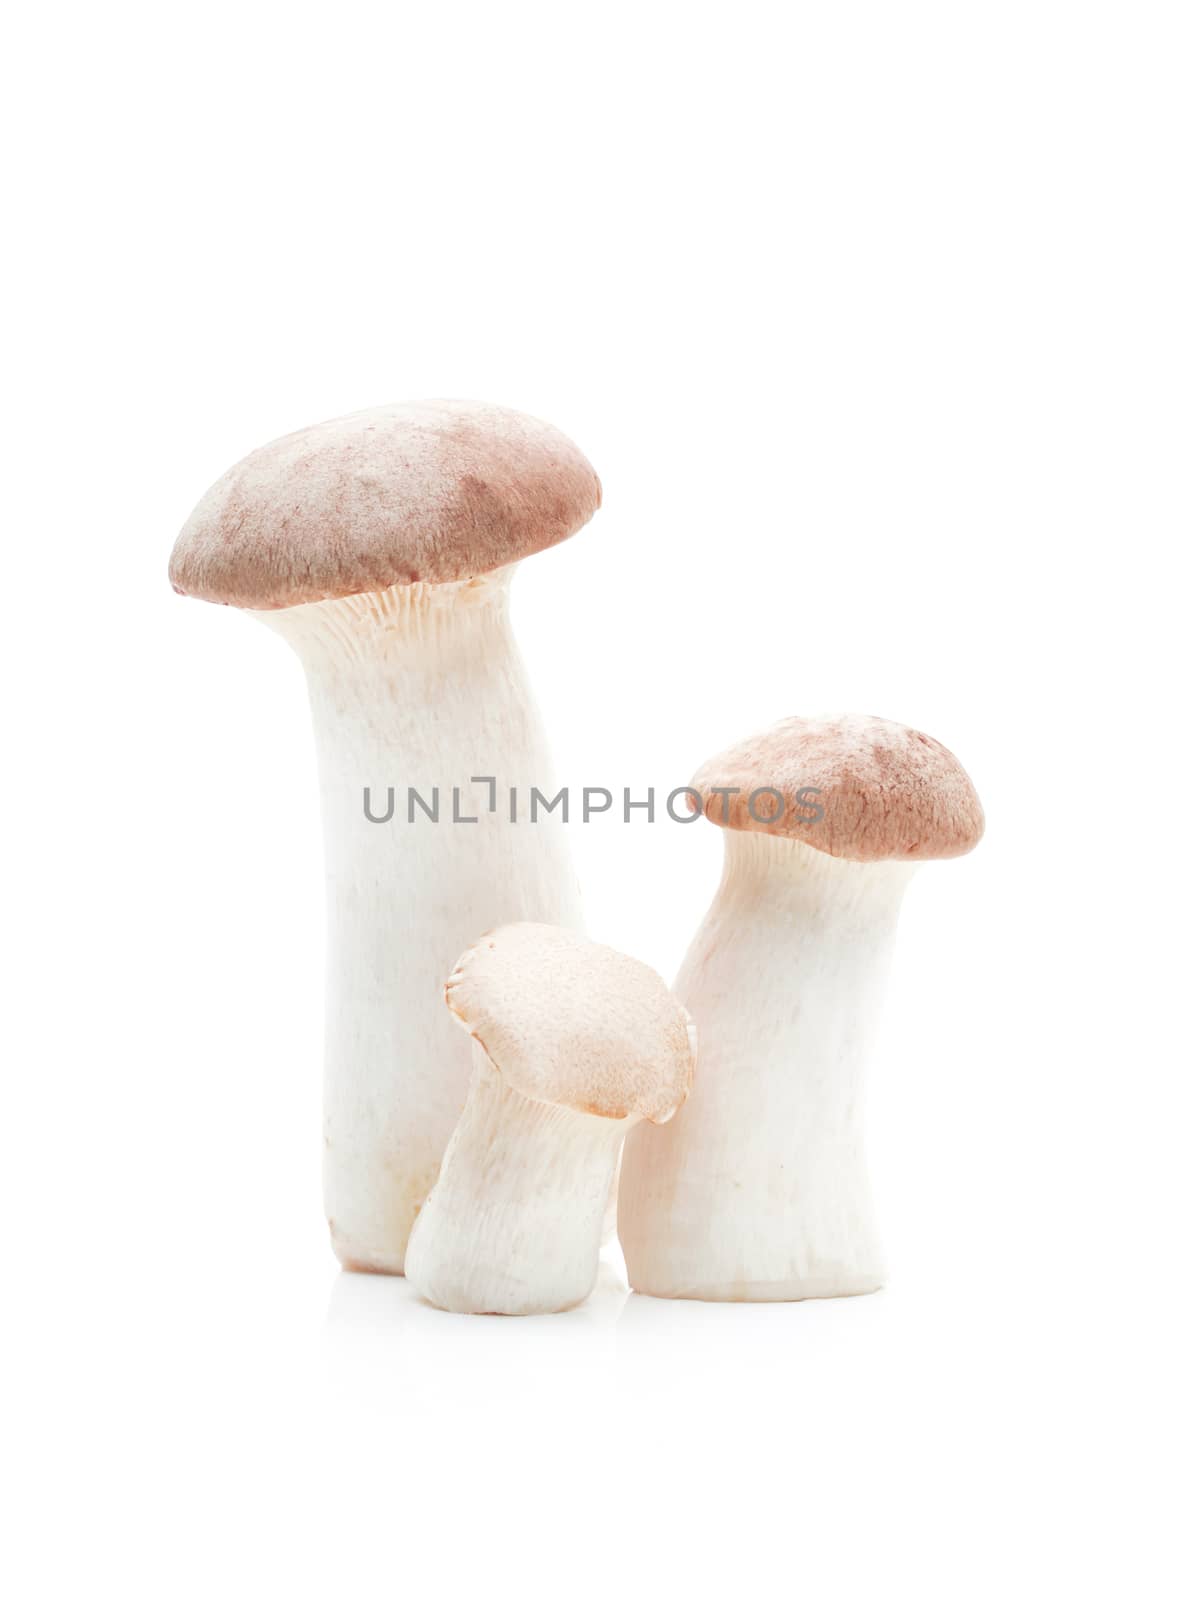 Mushroom on a white background by sompongtom